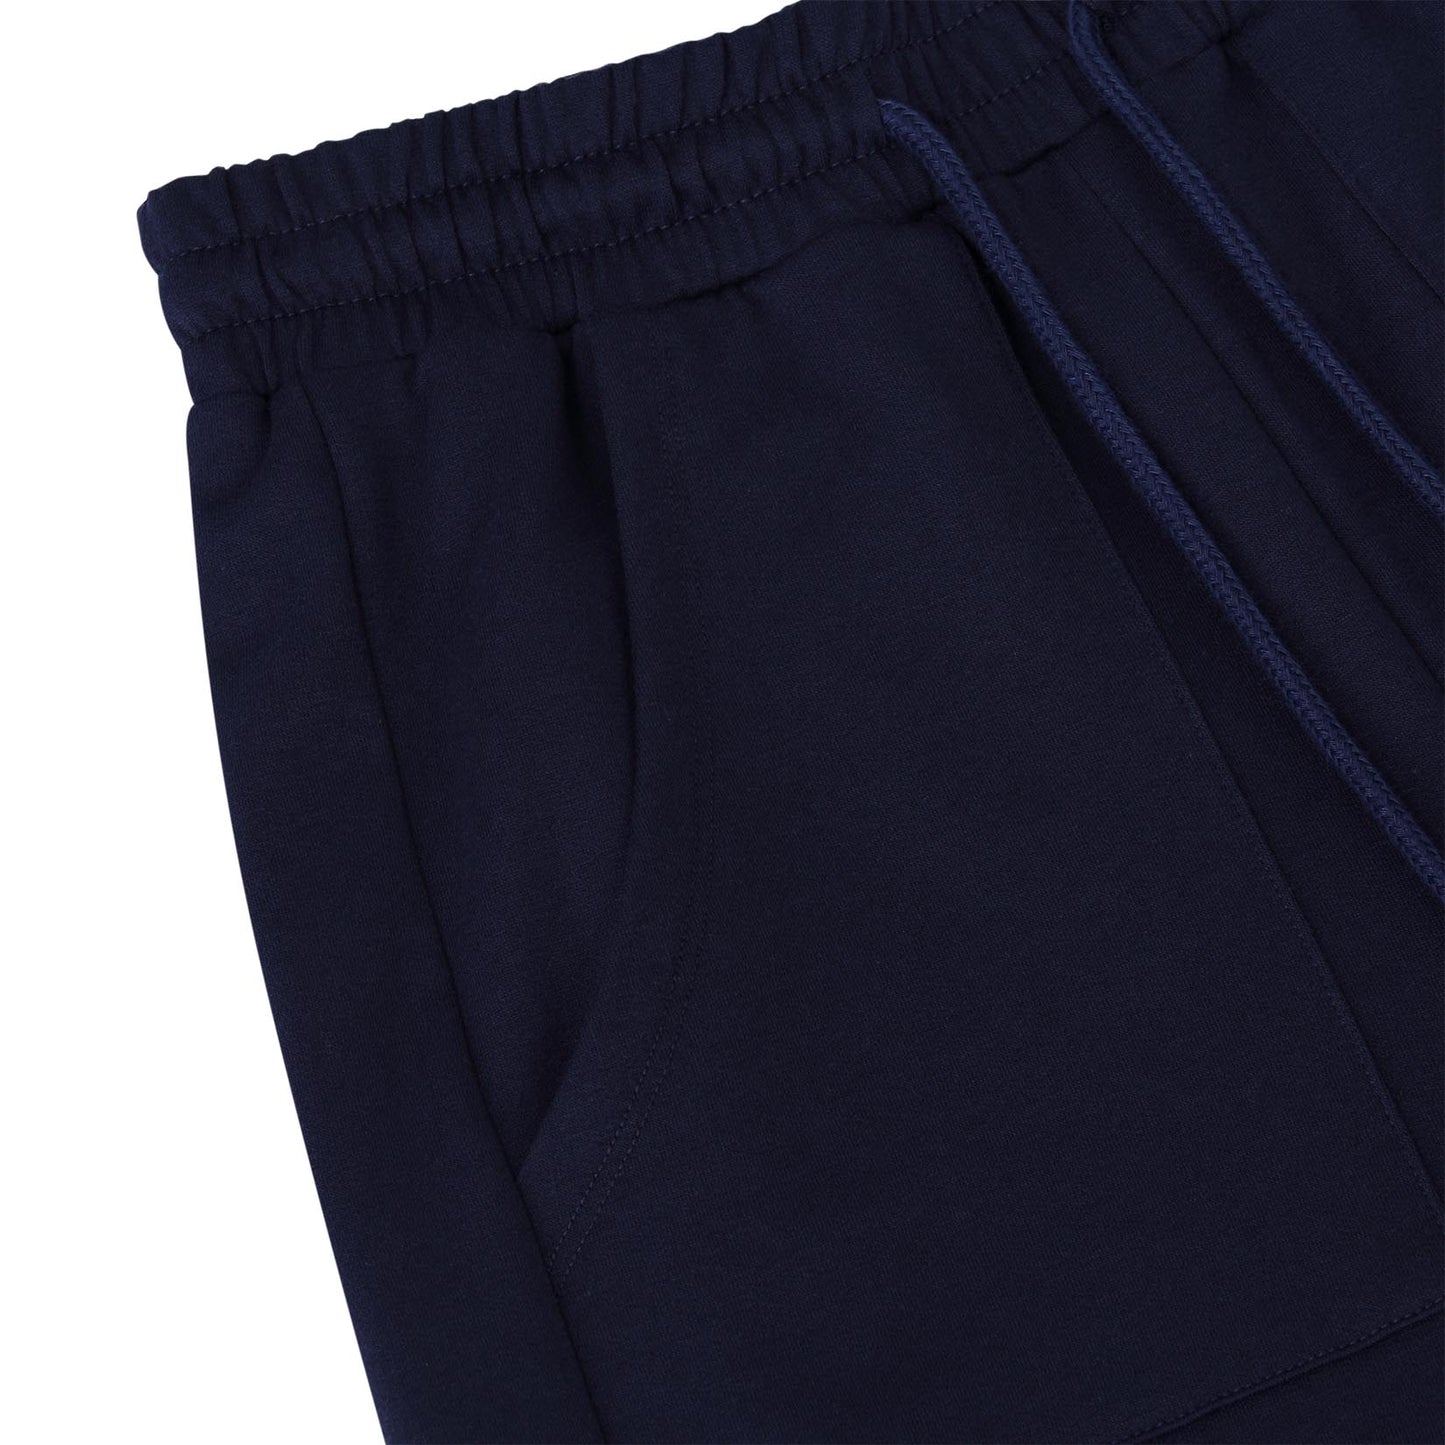 YESFASHION Ladies Casual Sports Pants Blue